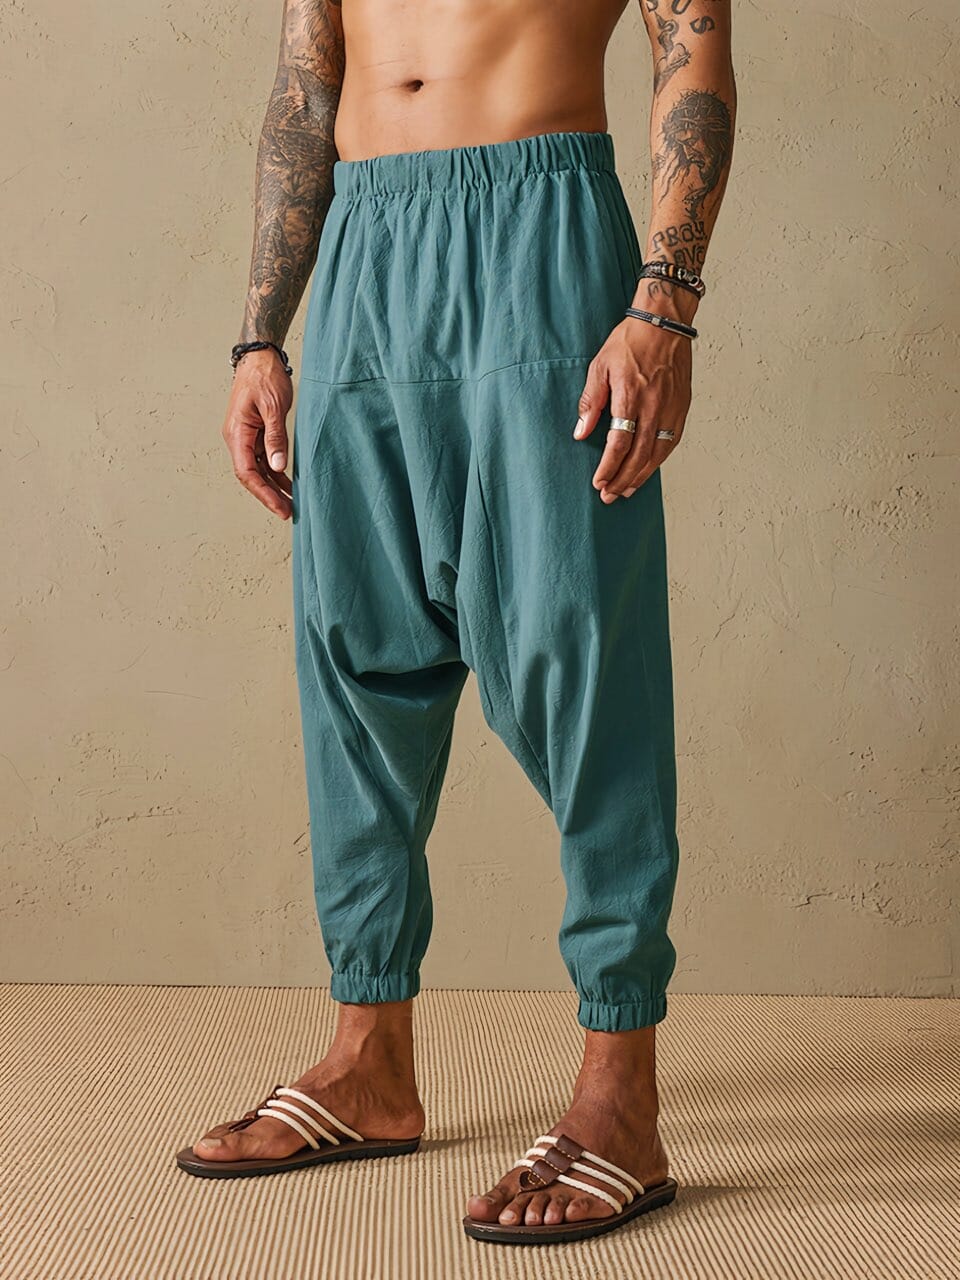 COOFANDY Men's Linen Capri Pants Casual Lightweight 3/4 Baggy Pants  Drawstring Elastic Waist Beach Yoga Pants with Pockets, Black, XL price in  Saudi Arabia,  Saudi Arabia